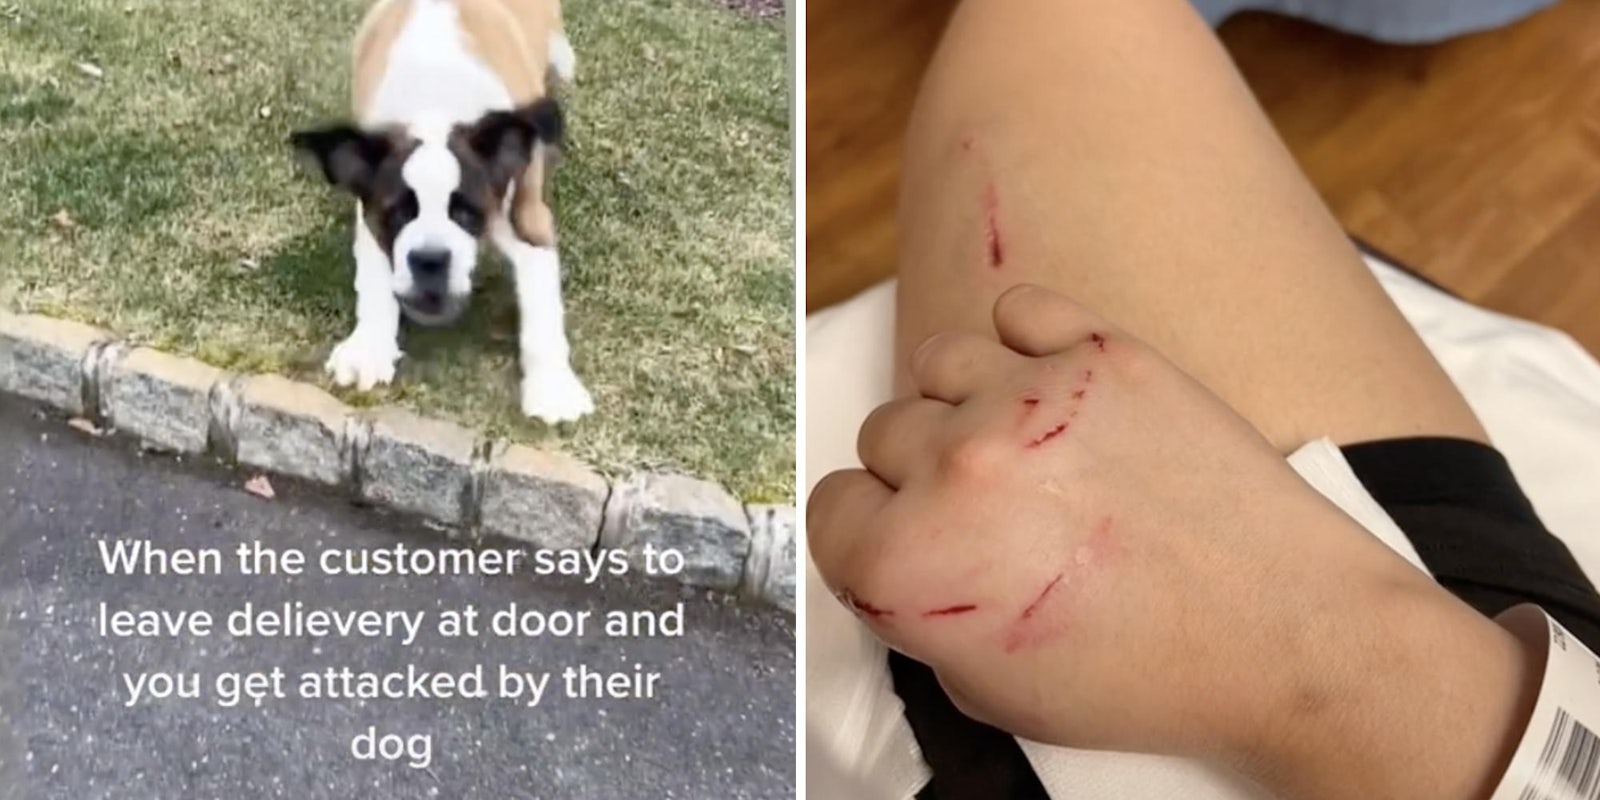 dog rushing at viewer (l) injured hand (r)